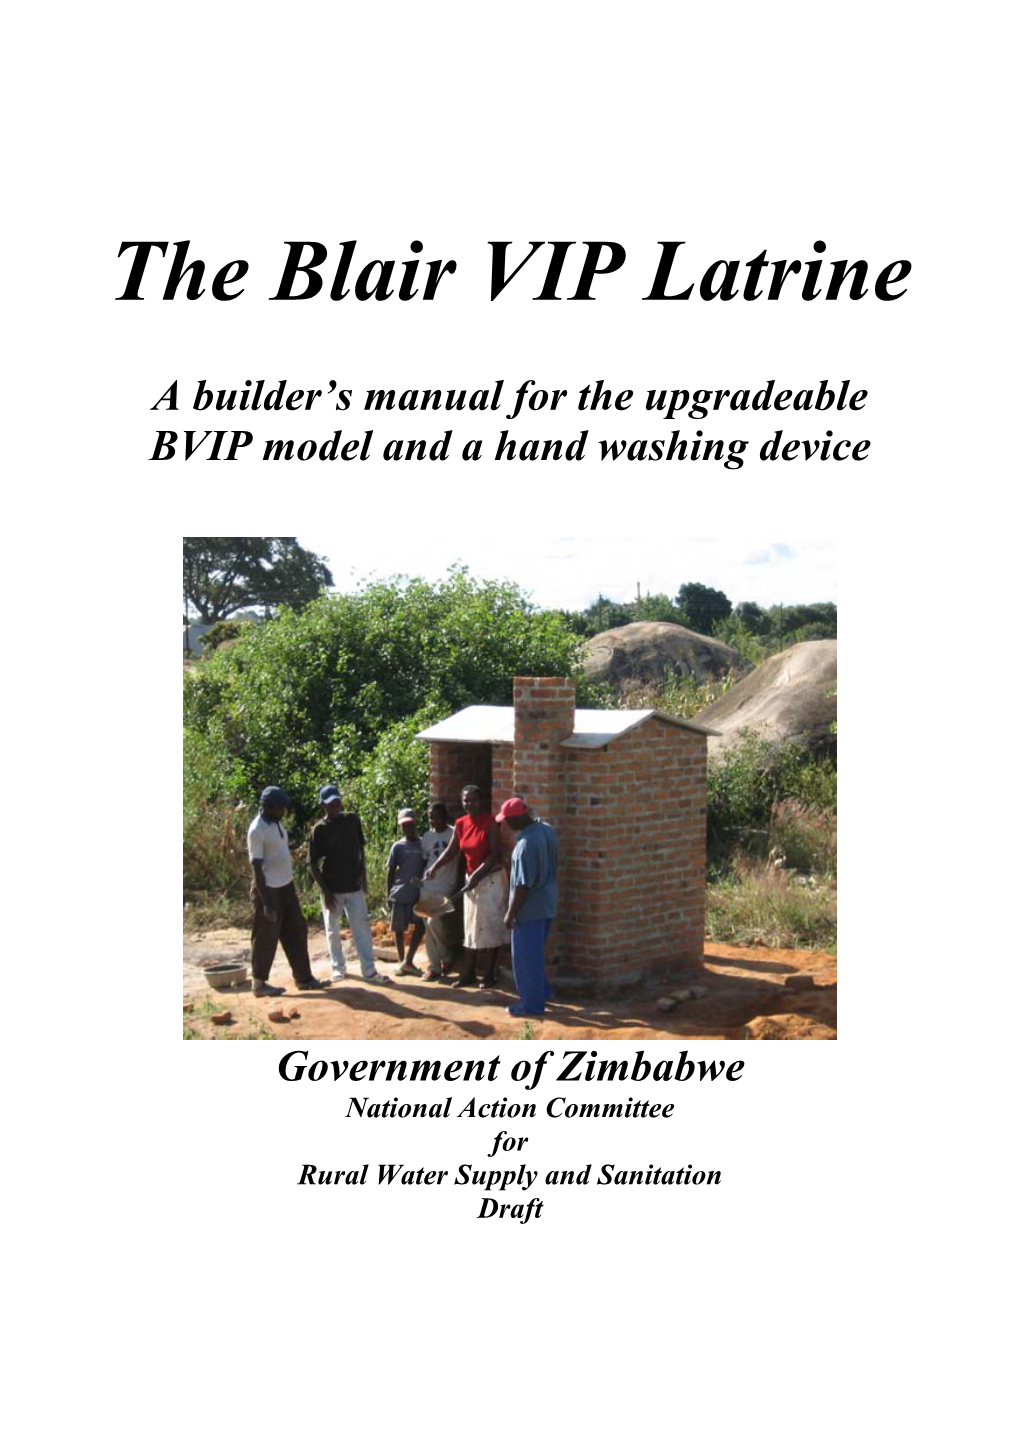 The Blair VIP Latrine